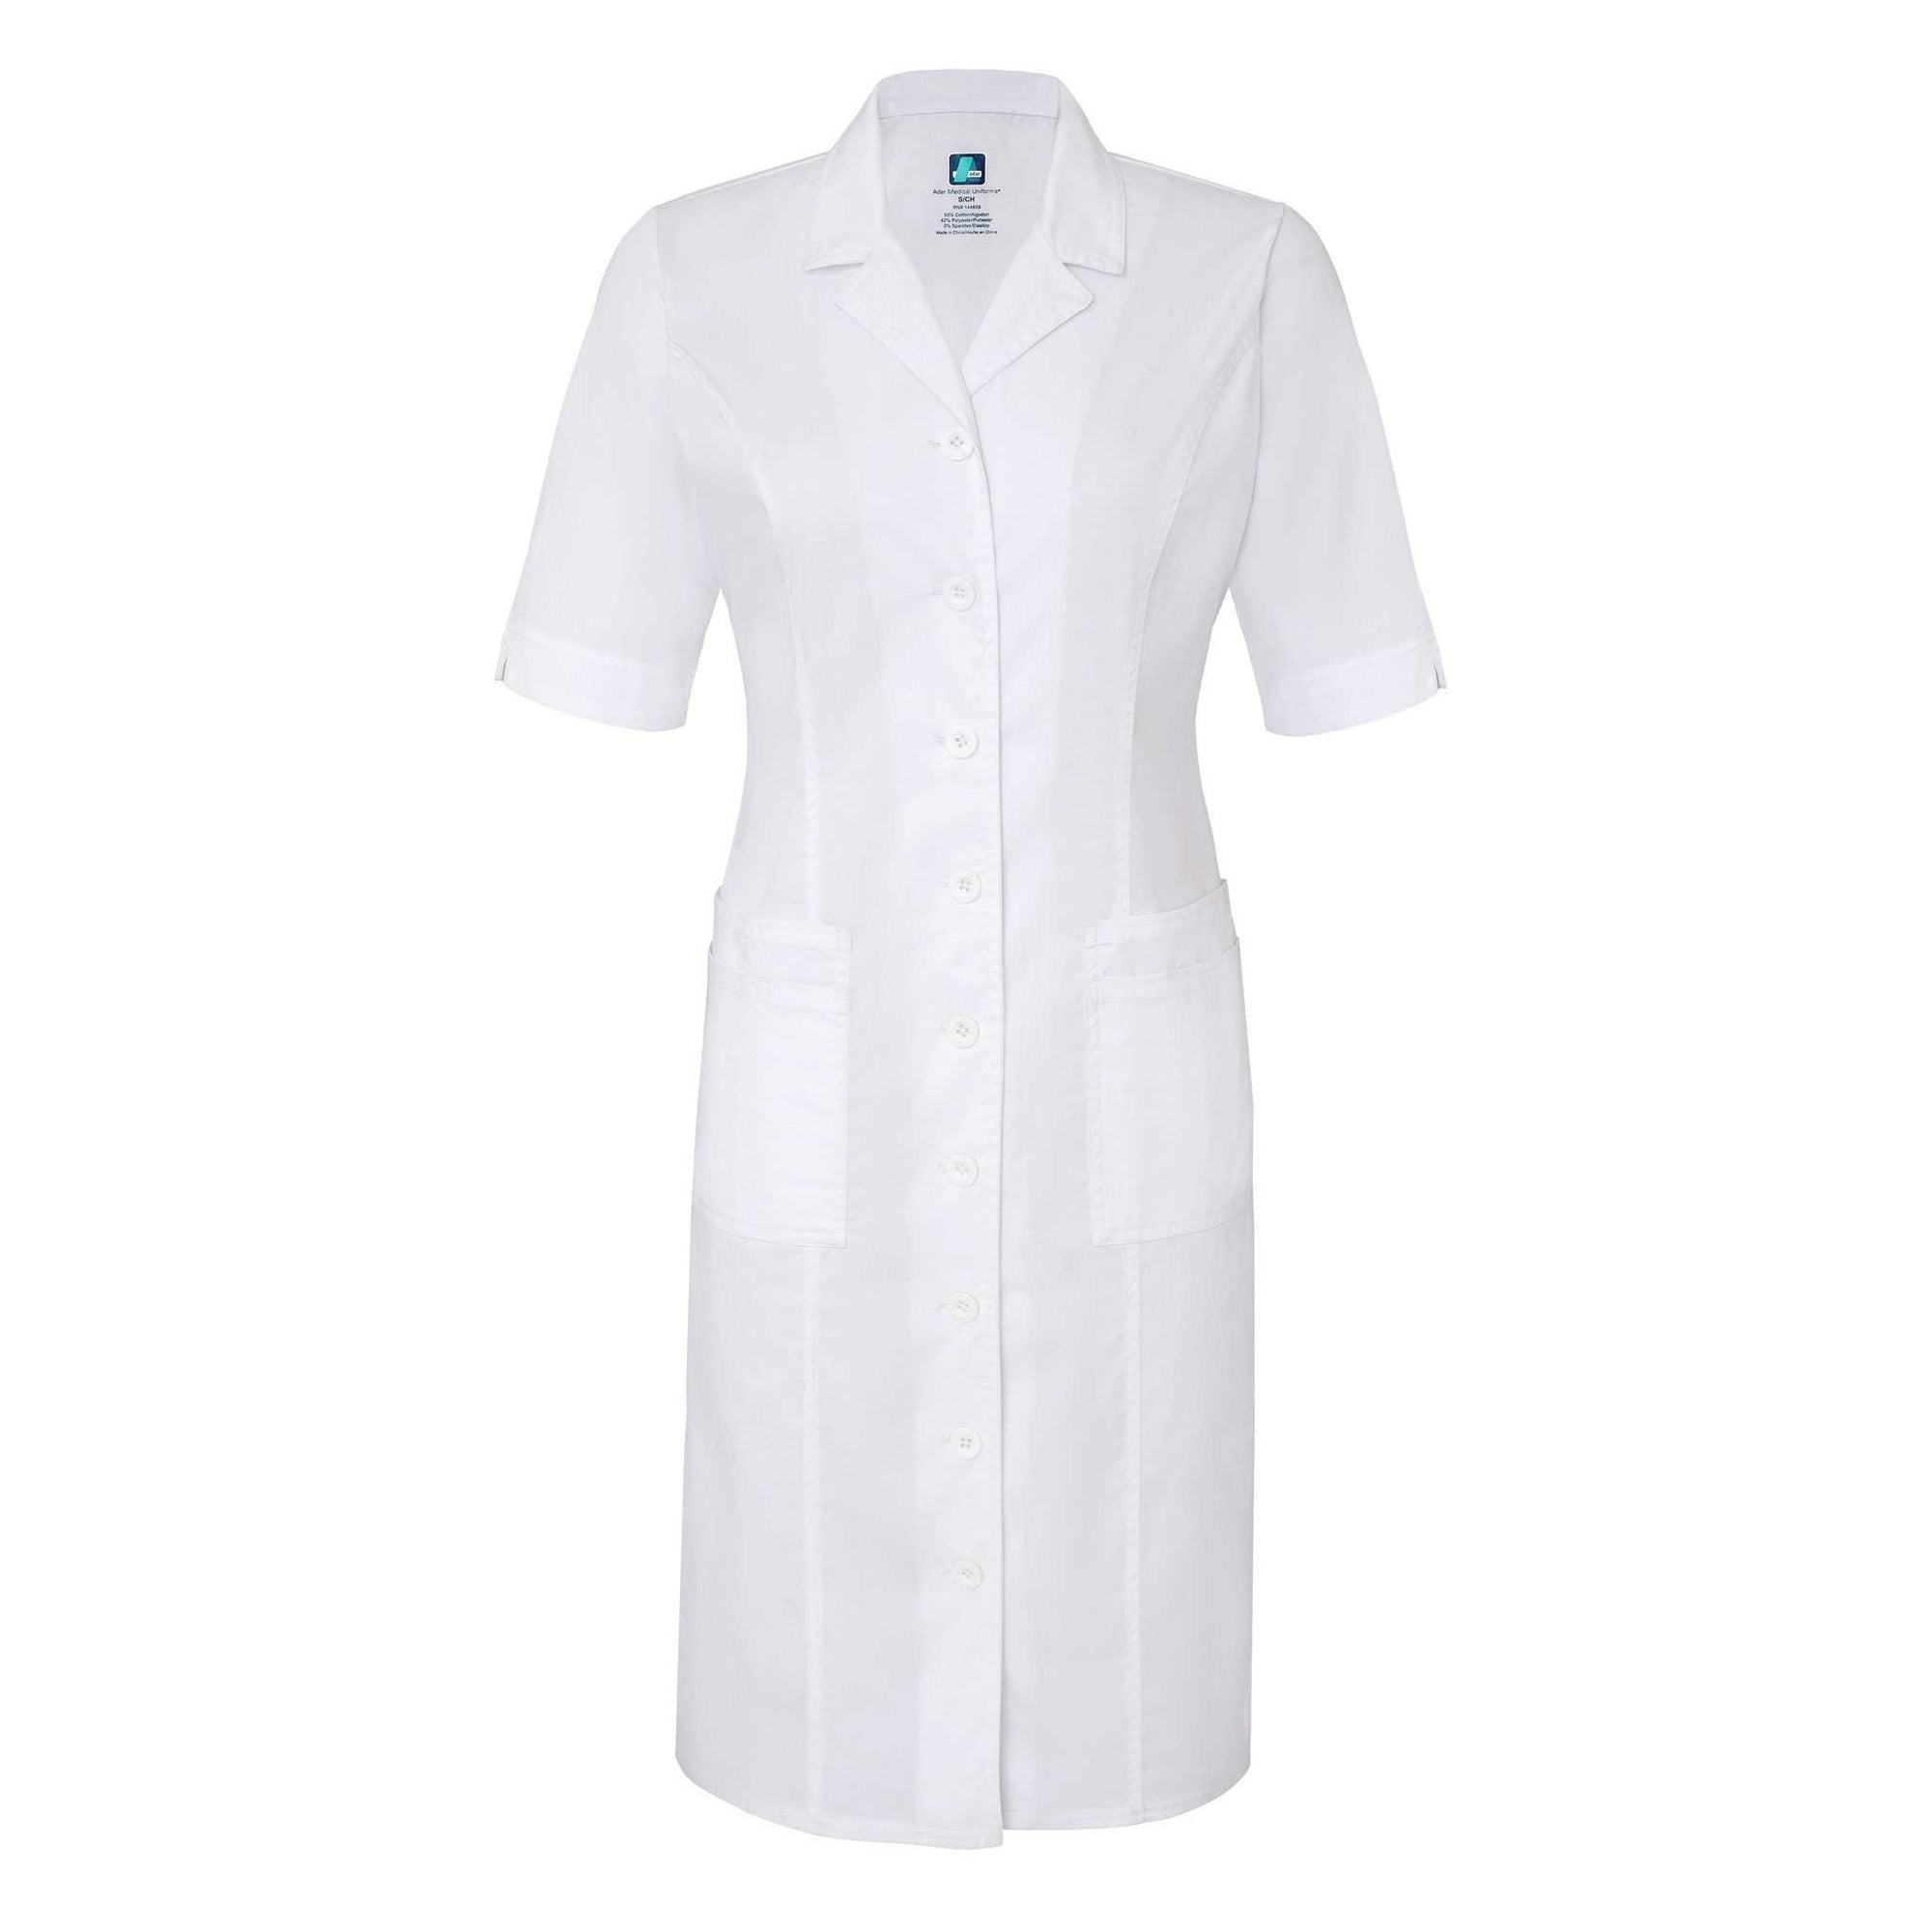  Adar - uniforms Medical Uniform Dresses uniforms online Adar Pop-Stretch Junior Fit Short Sleeve Back-Smocked Dress - SchoolUniforms.com